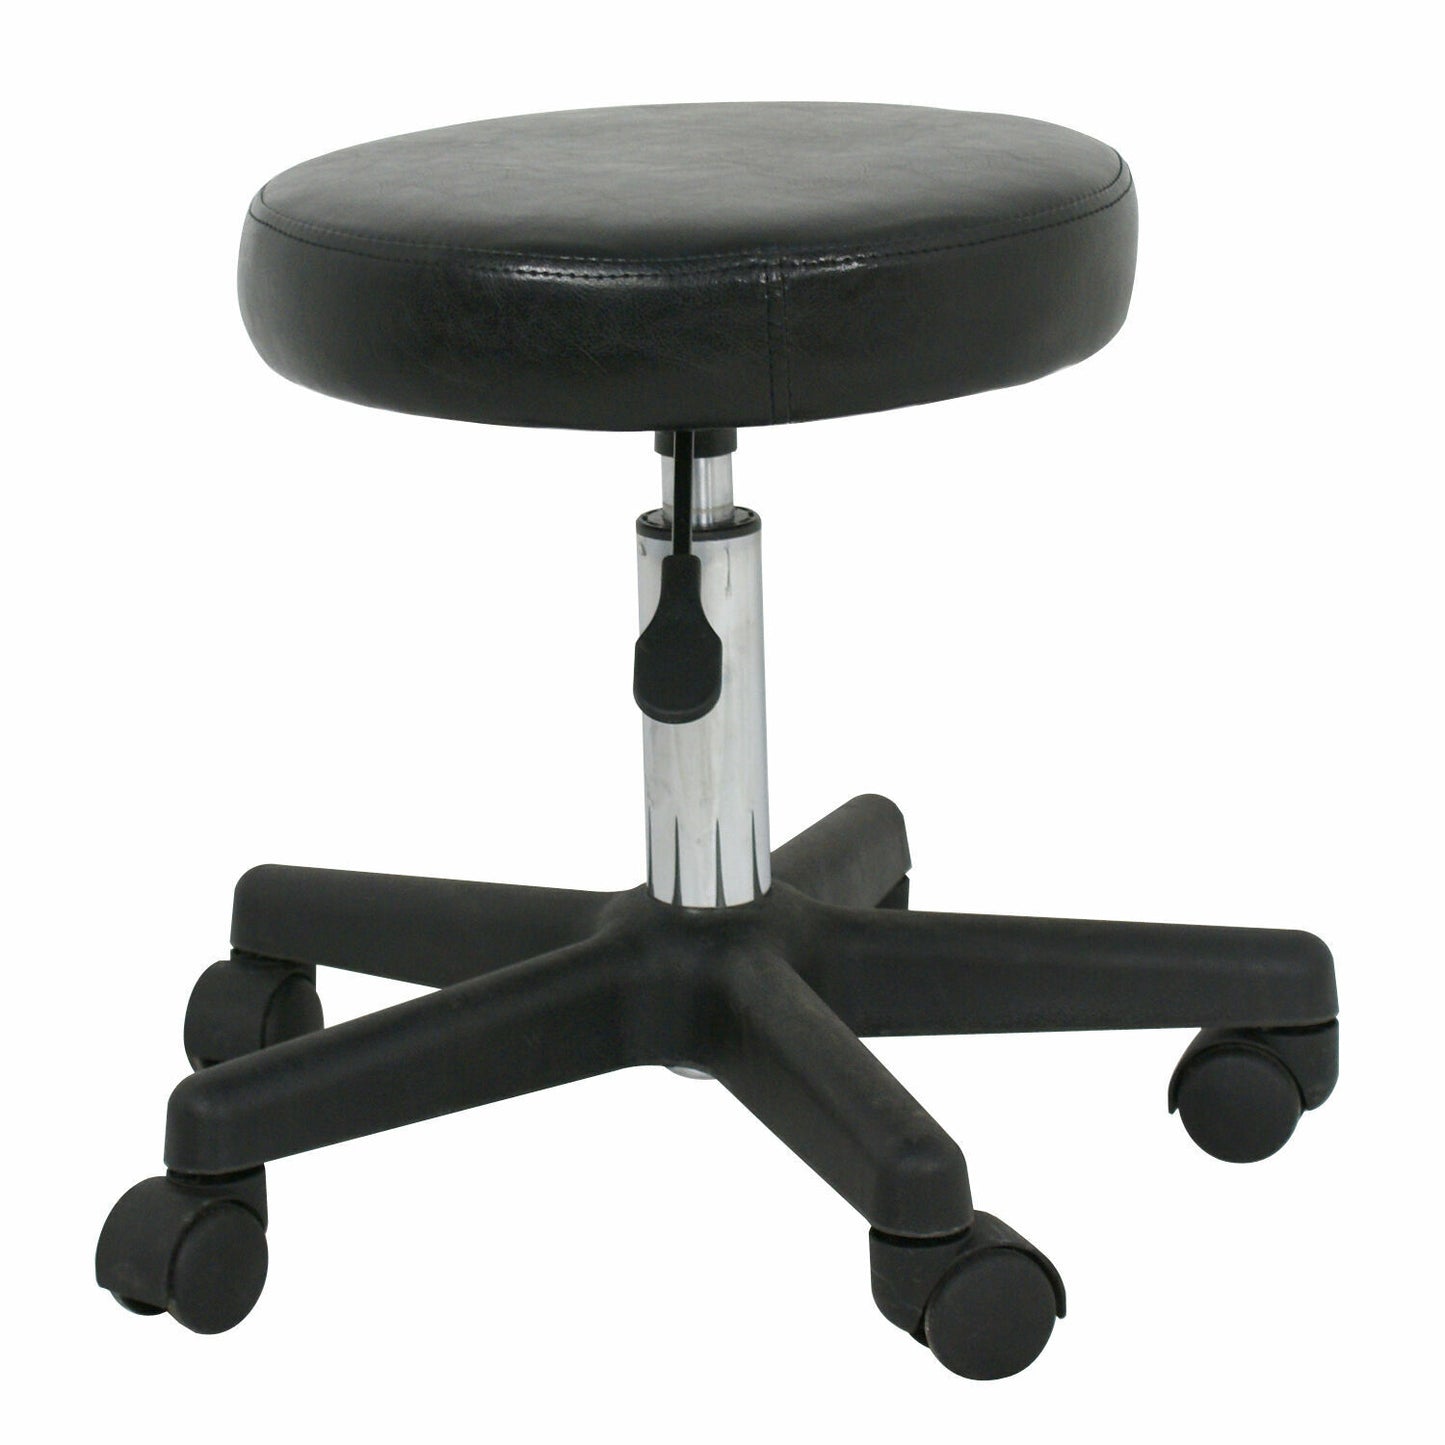 2PCS 360° Rotation Adjustable Height Salon Stool Hydraulic Rolling Office Chair